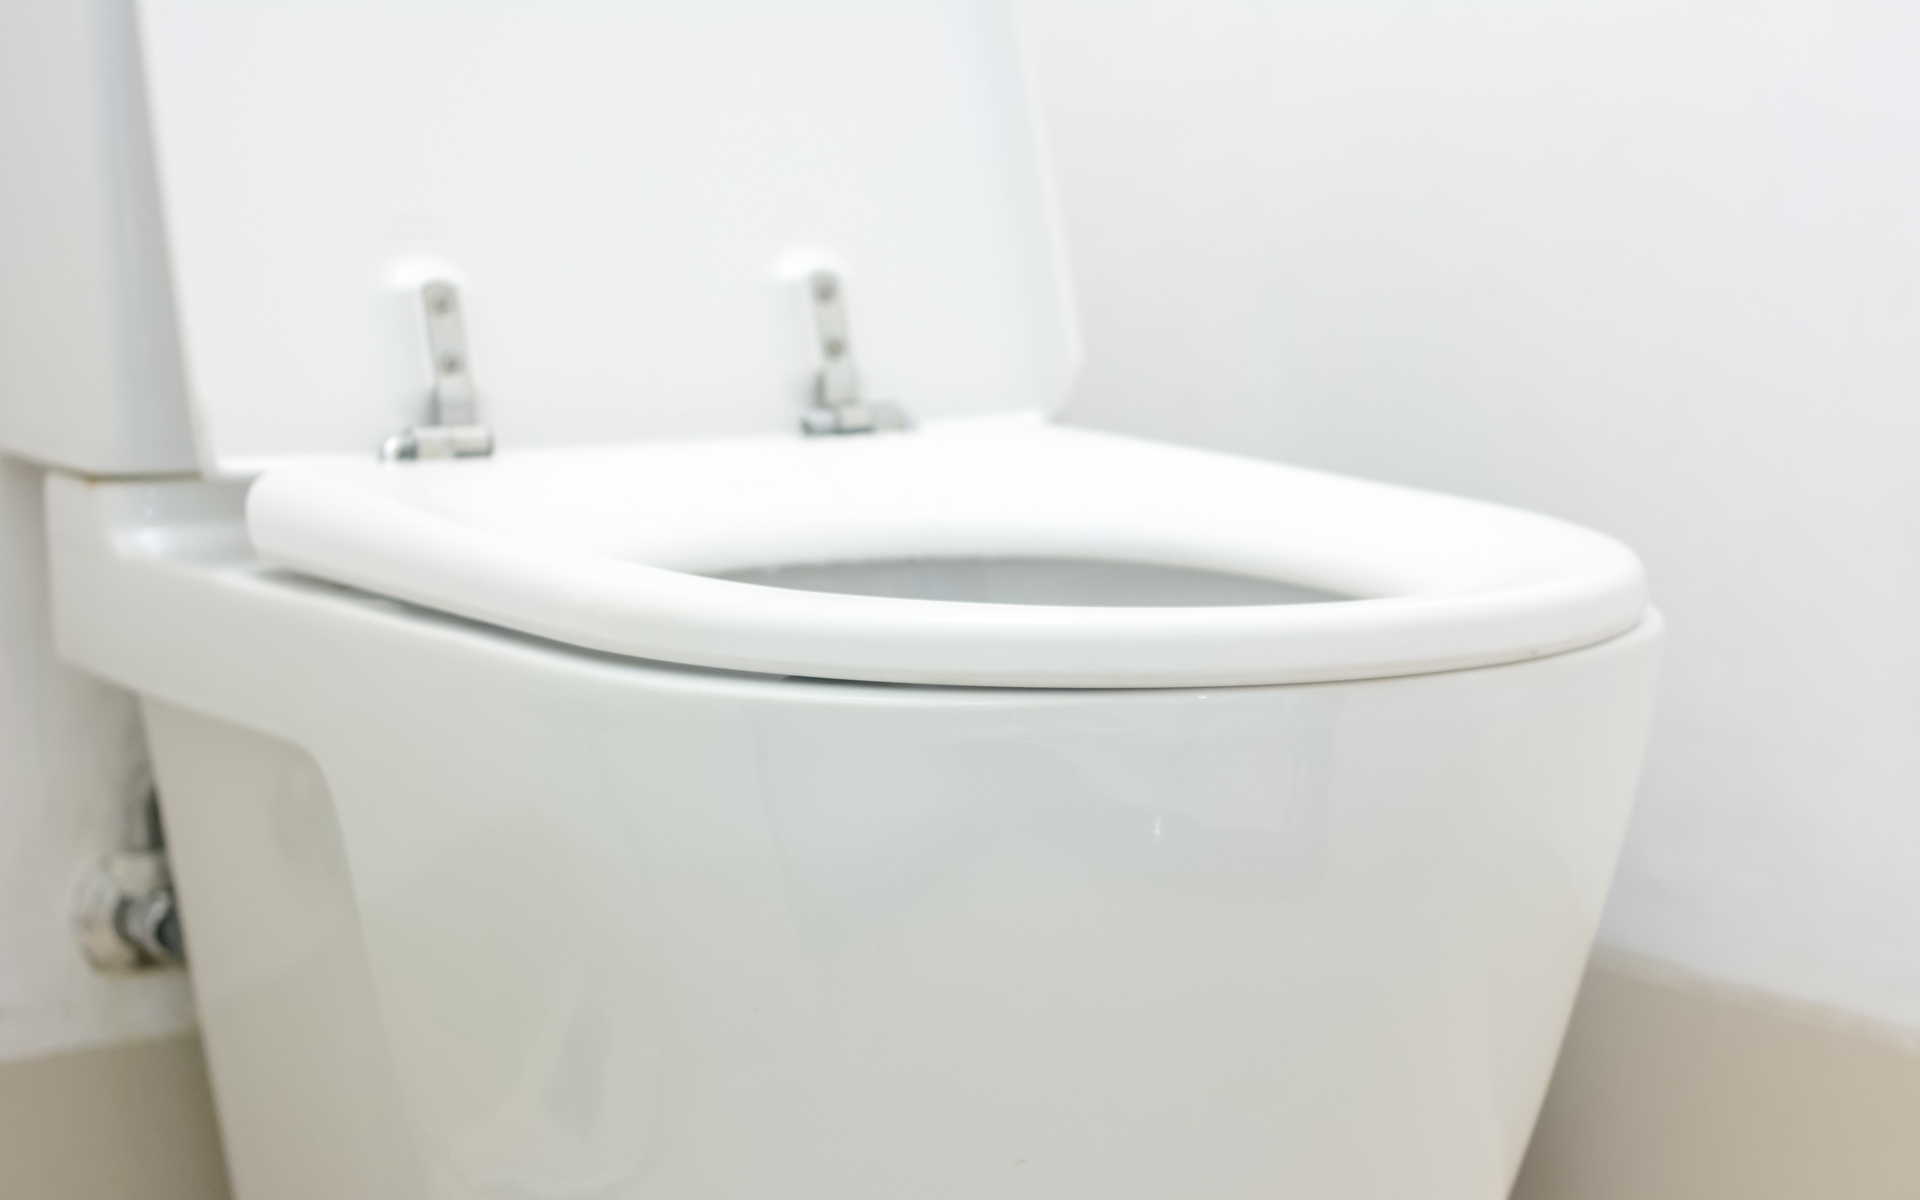 Toilet Repair Miami | Toilet Installation Miami | Fix Leaking and Clogged Toilet | 24-7 Plumbing Services | Miami, Coral Way, Brickell